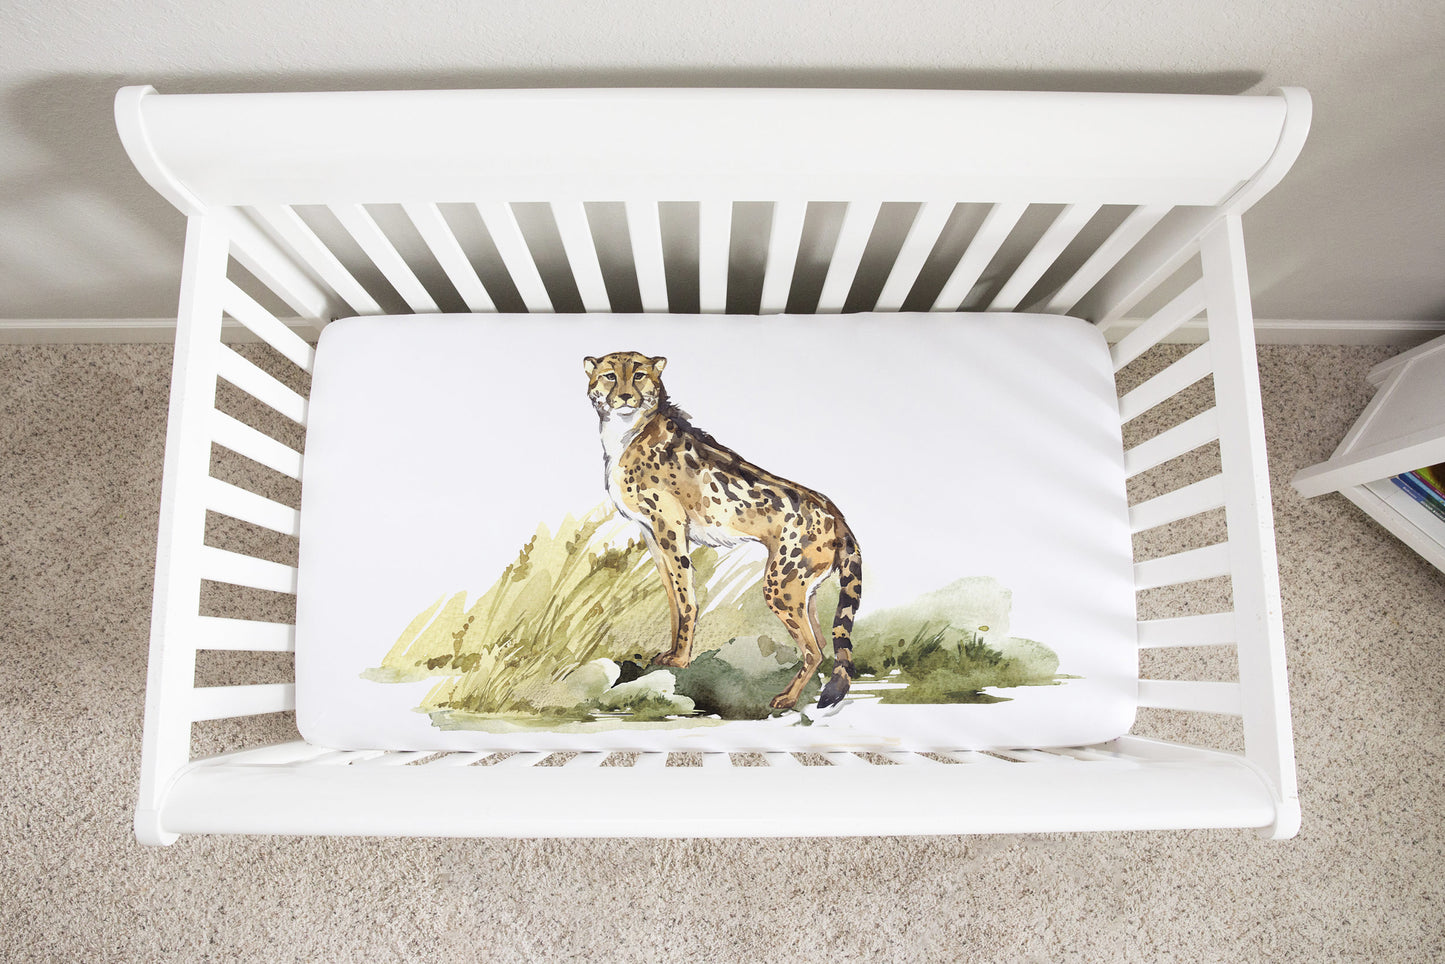 Cheetah Minky Crib Sheet, Safari Nursery Bedding - Africa Encounter